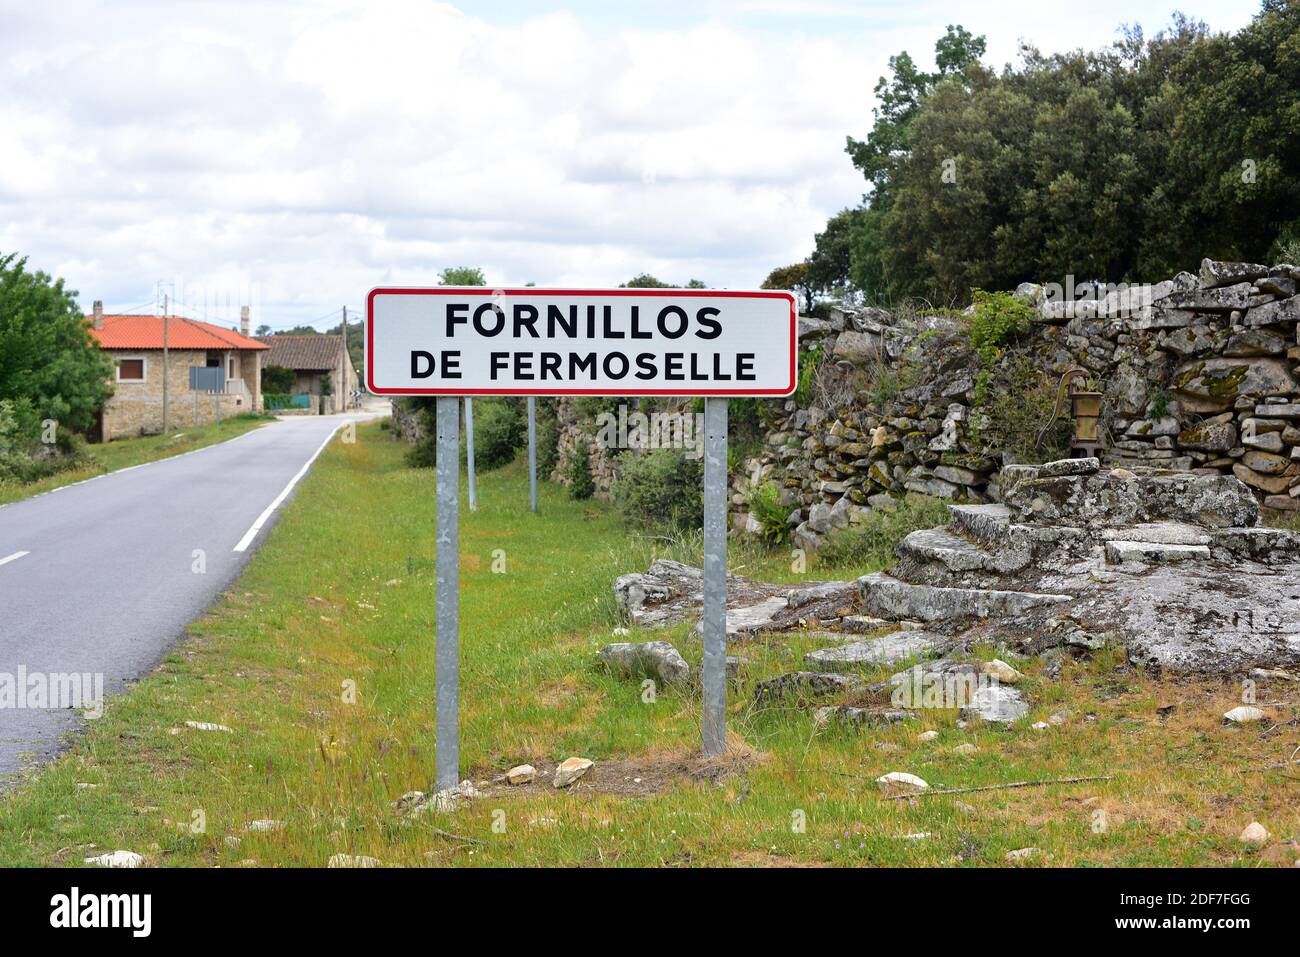 Fornillos de Fermoselle, Villar del Buey municipality. At right manual hydraulic pump. Zamora province, Castilla y Leon, Spain. Stock Photo